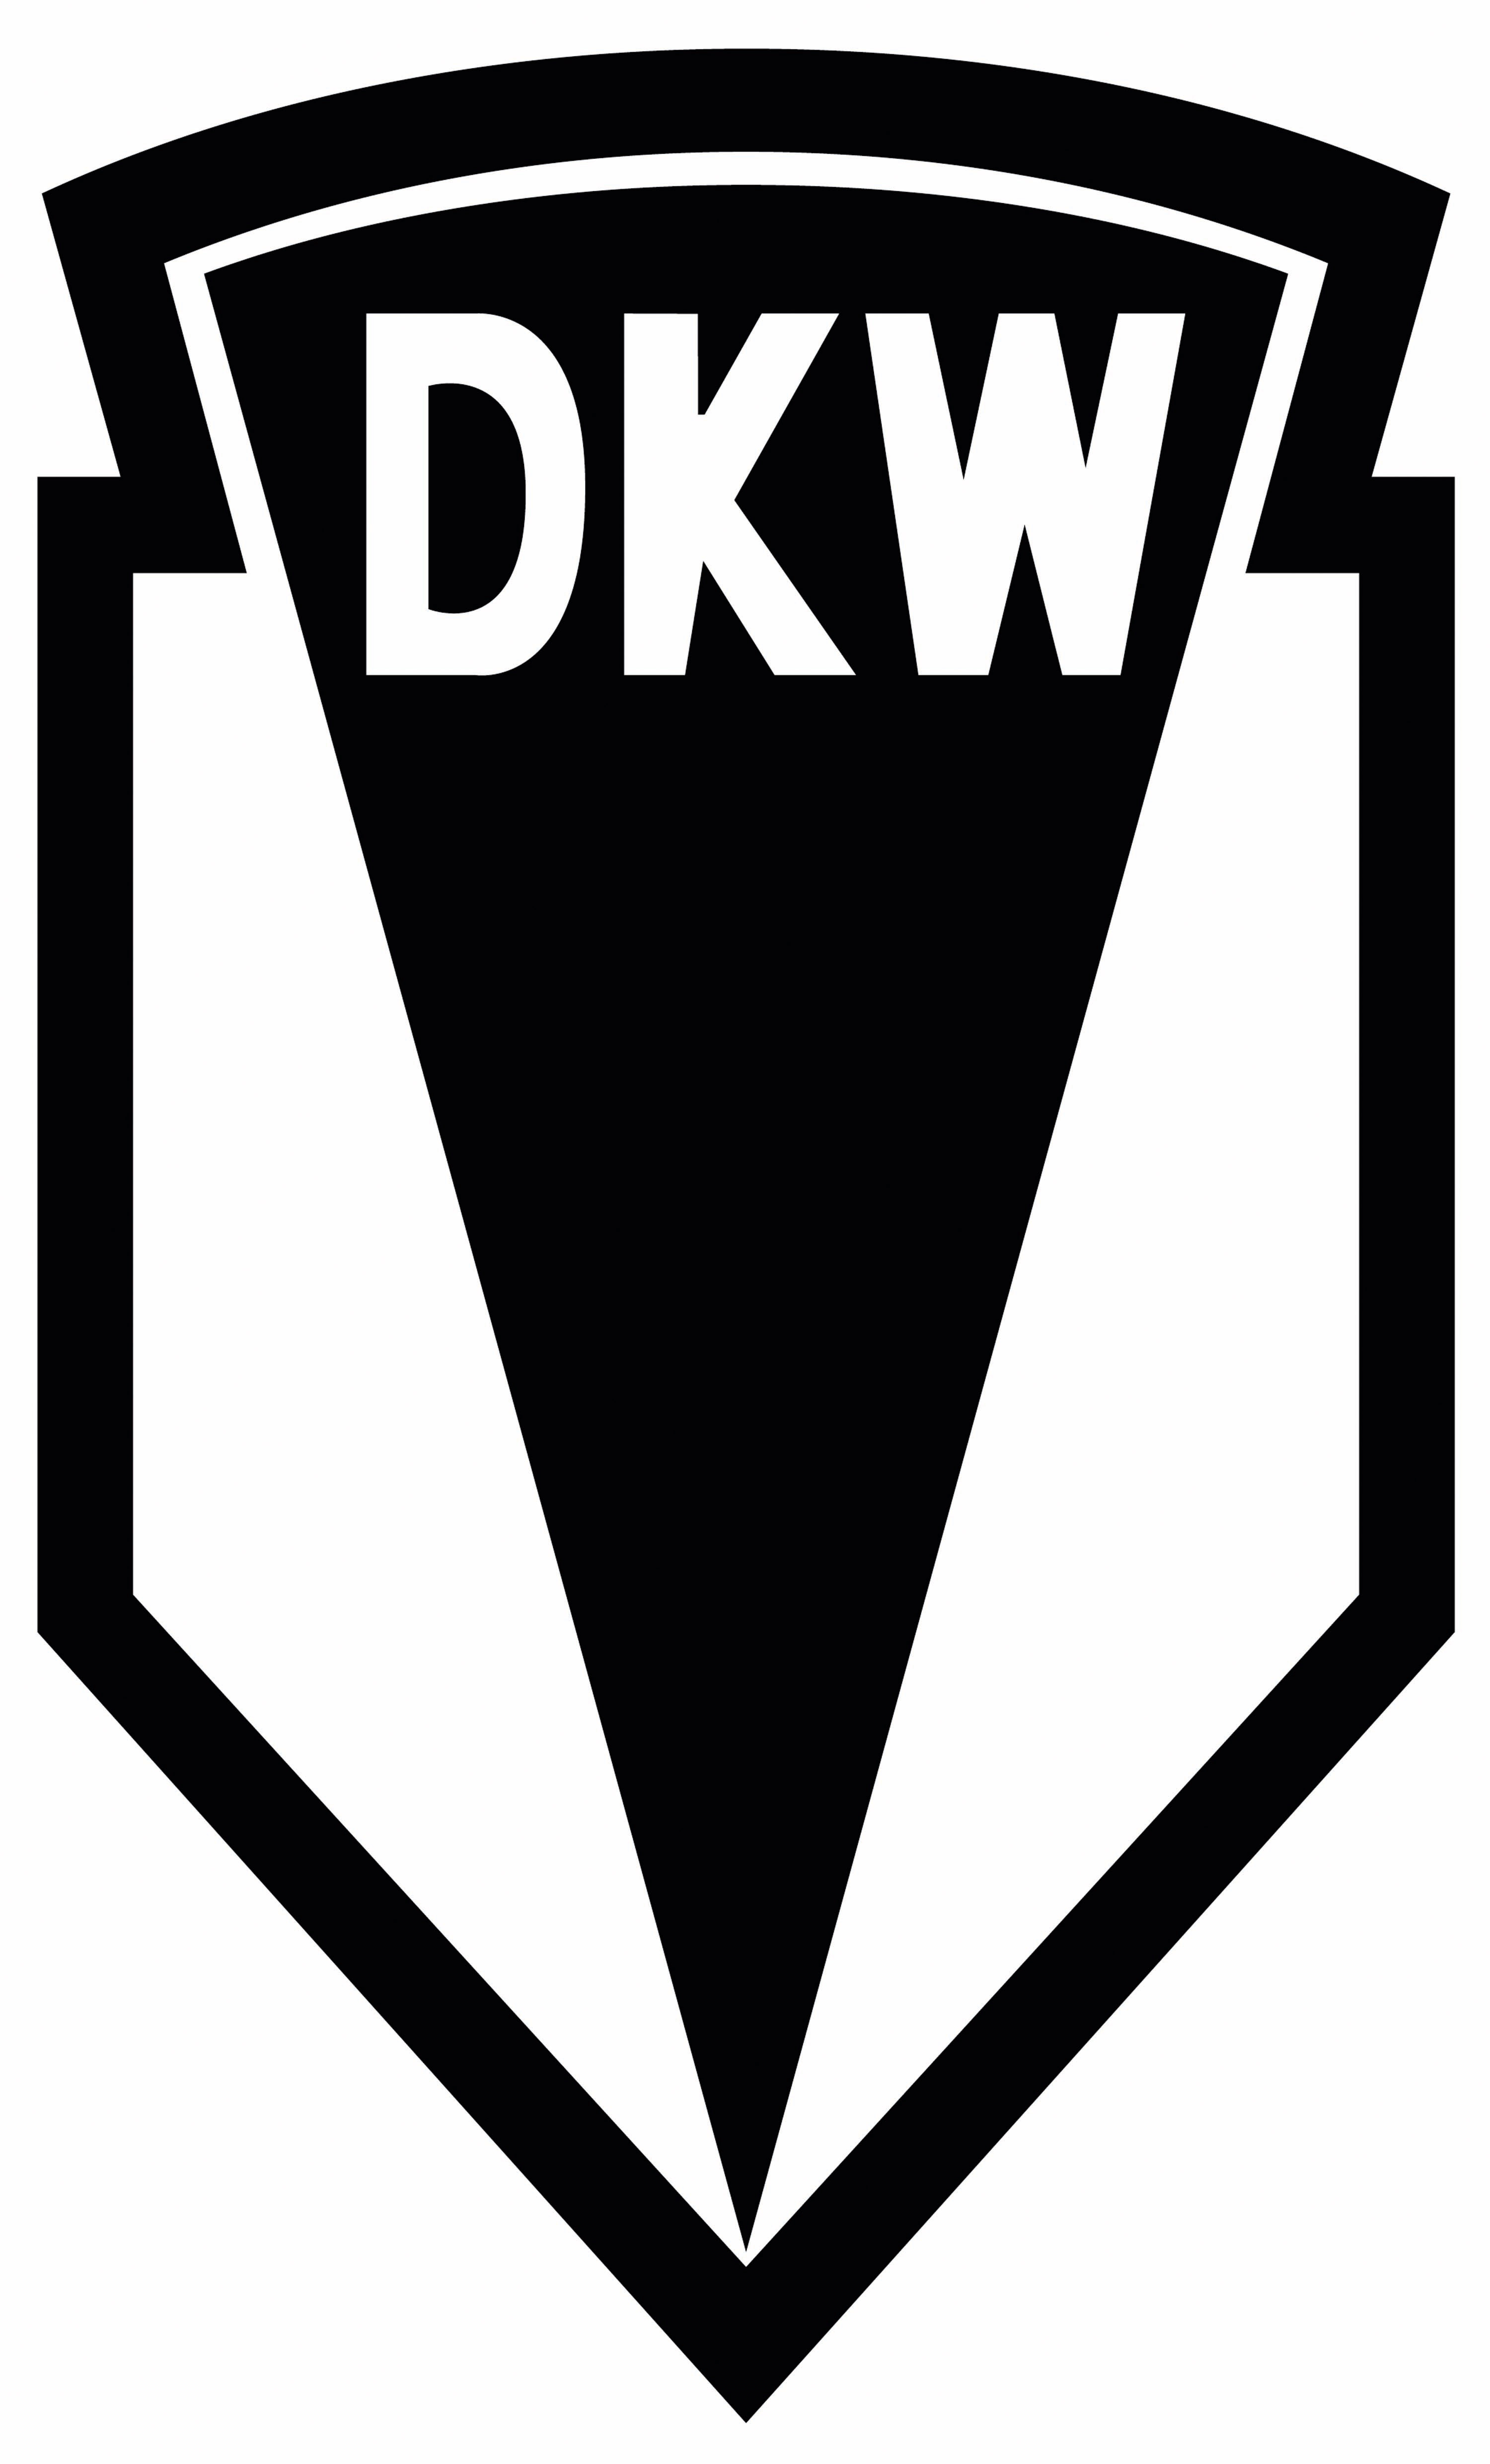 Black Triangle Car Logo - Logo DKW 1907 | MOTORCYCLES - LOGOS | Cars, Motorcycle logo, Logos